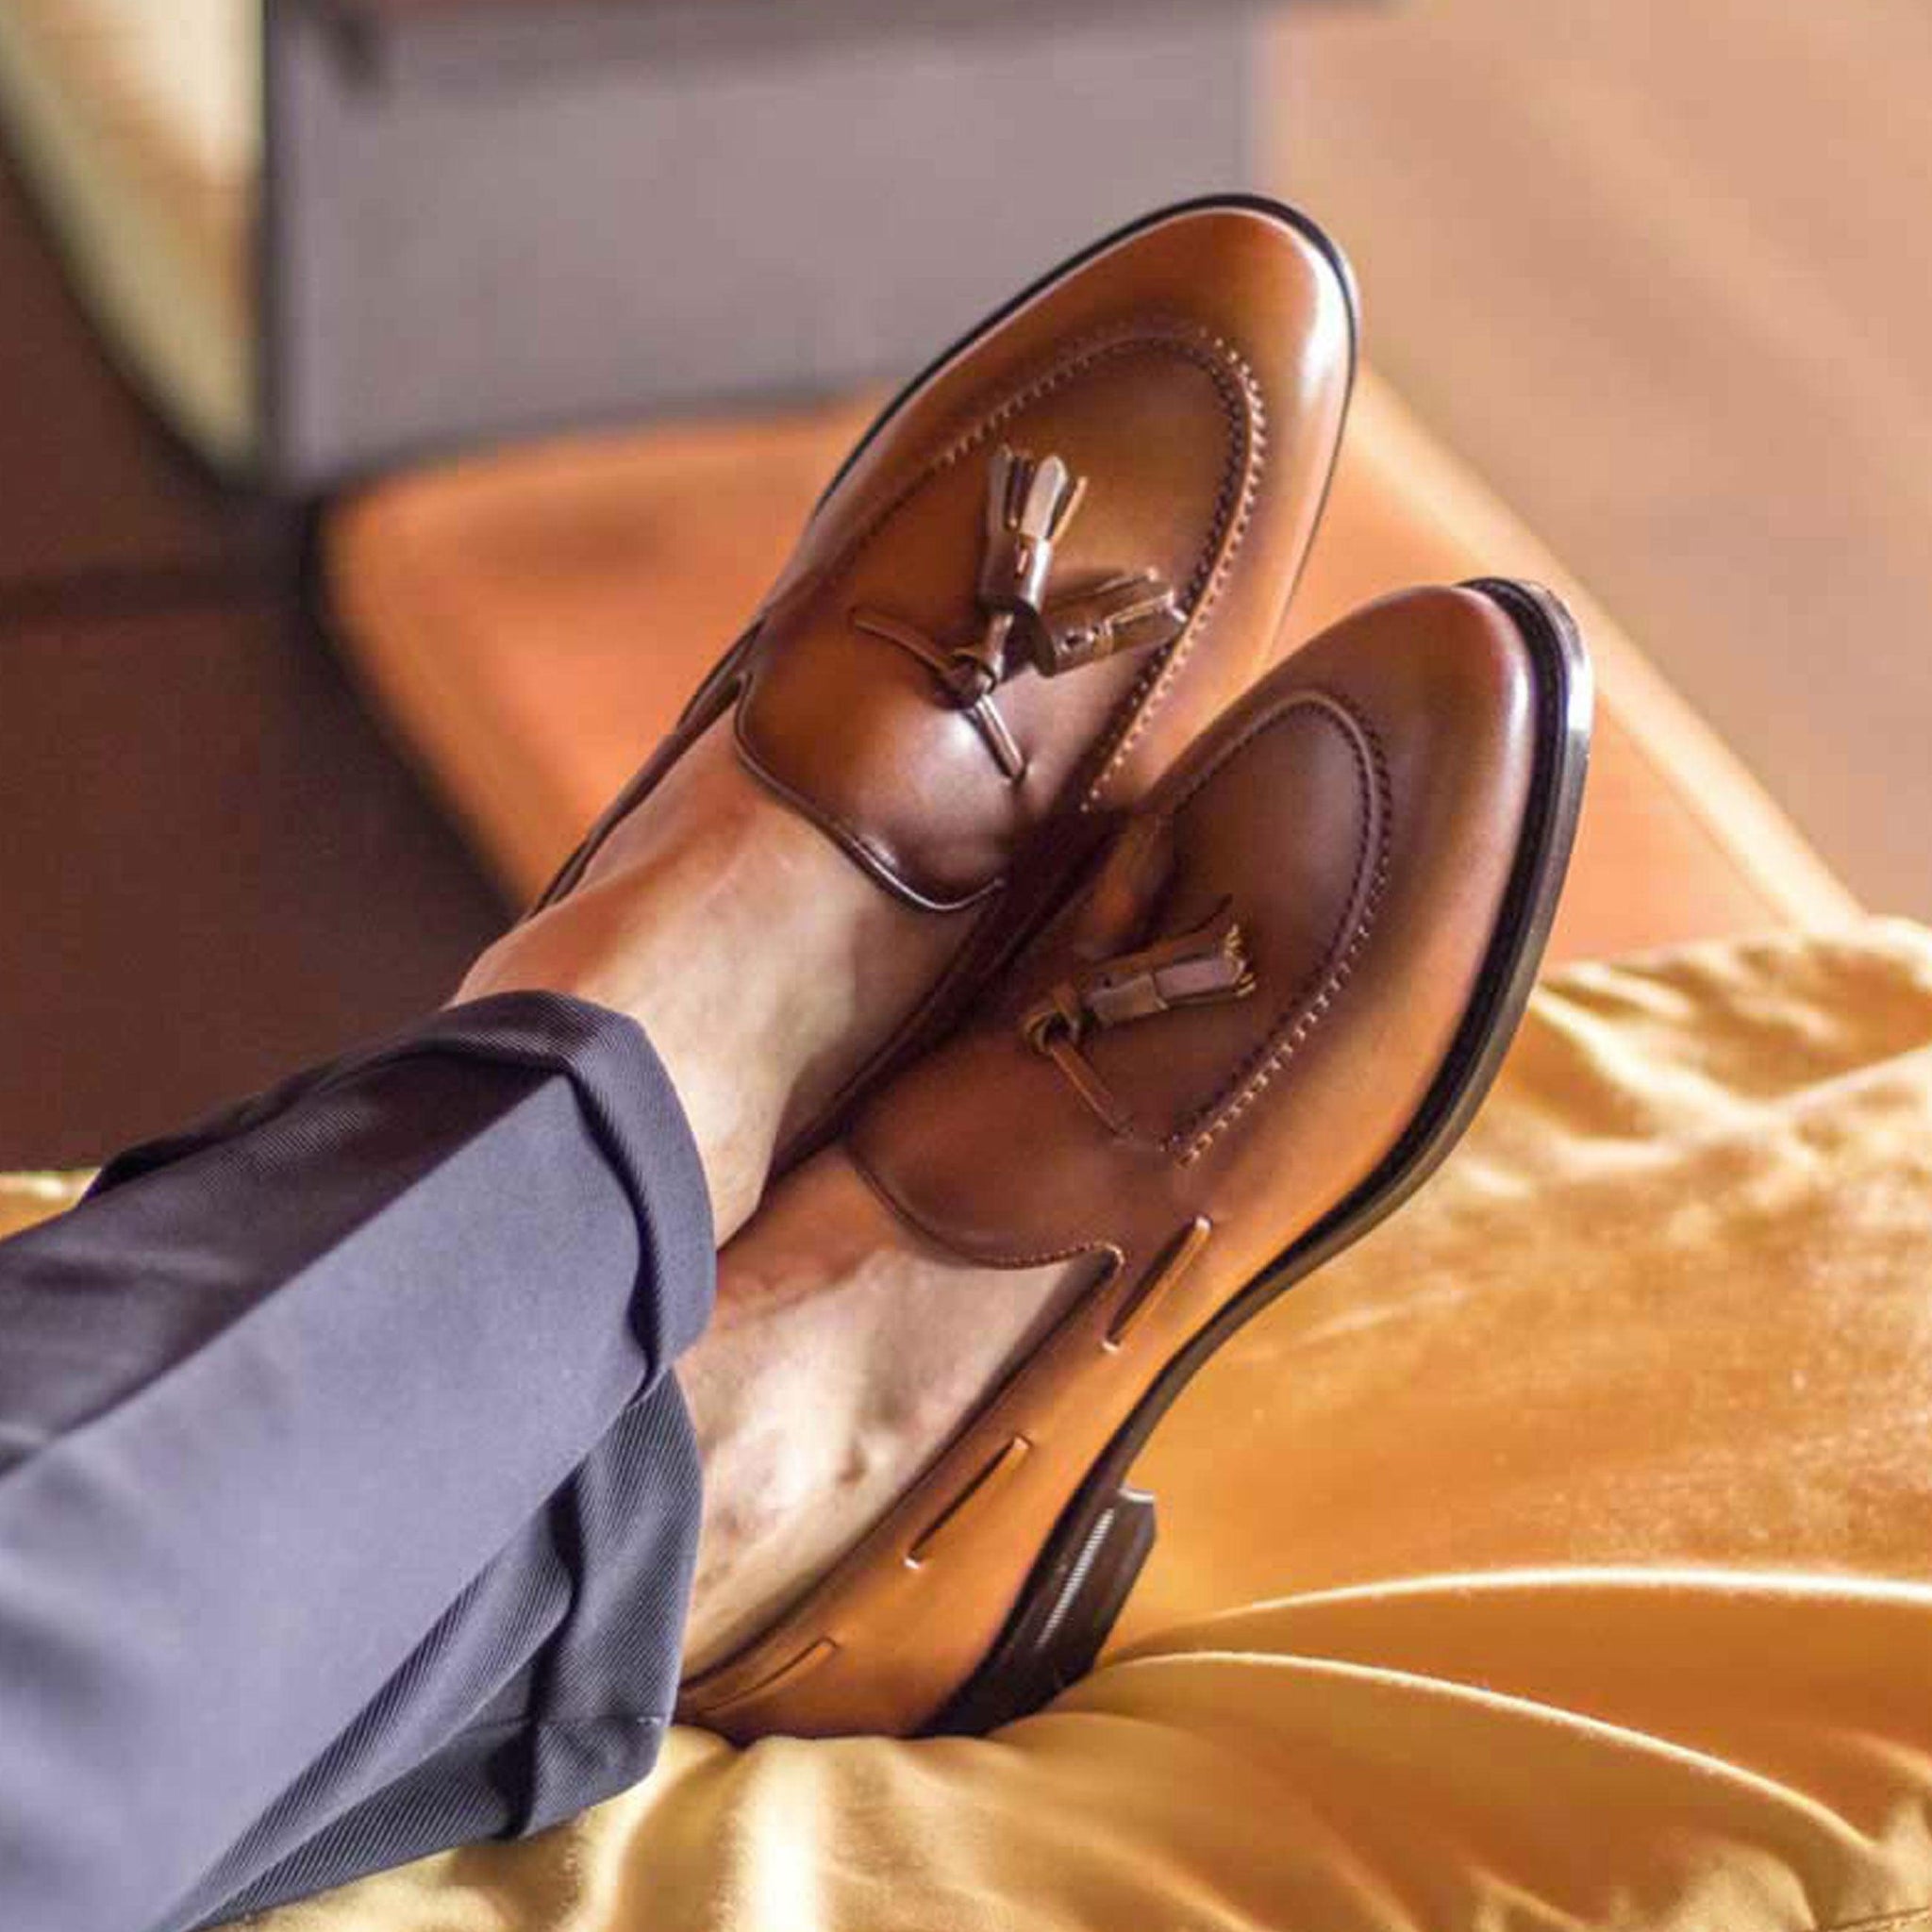 Cognac Calf Leather Wholecut Shoes - Custom Made 12